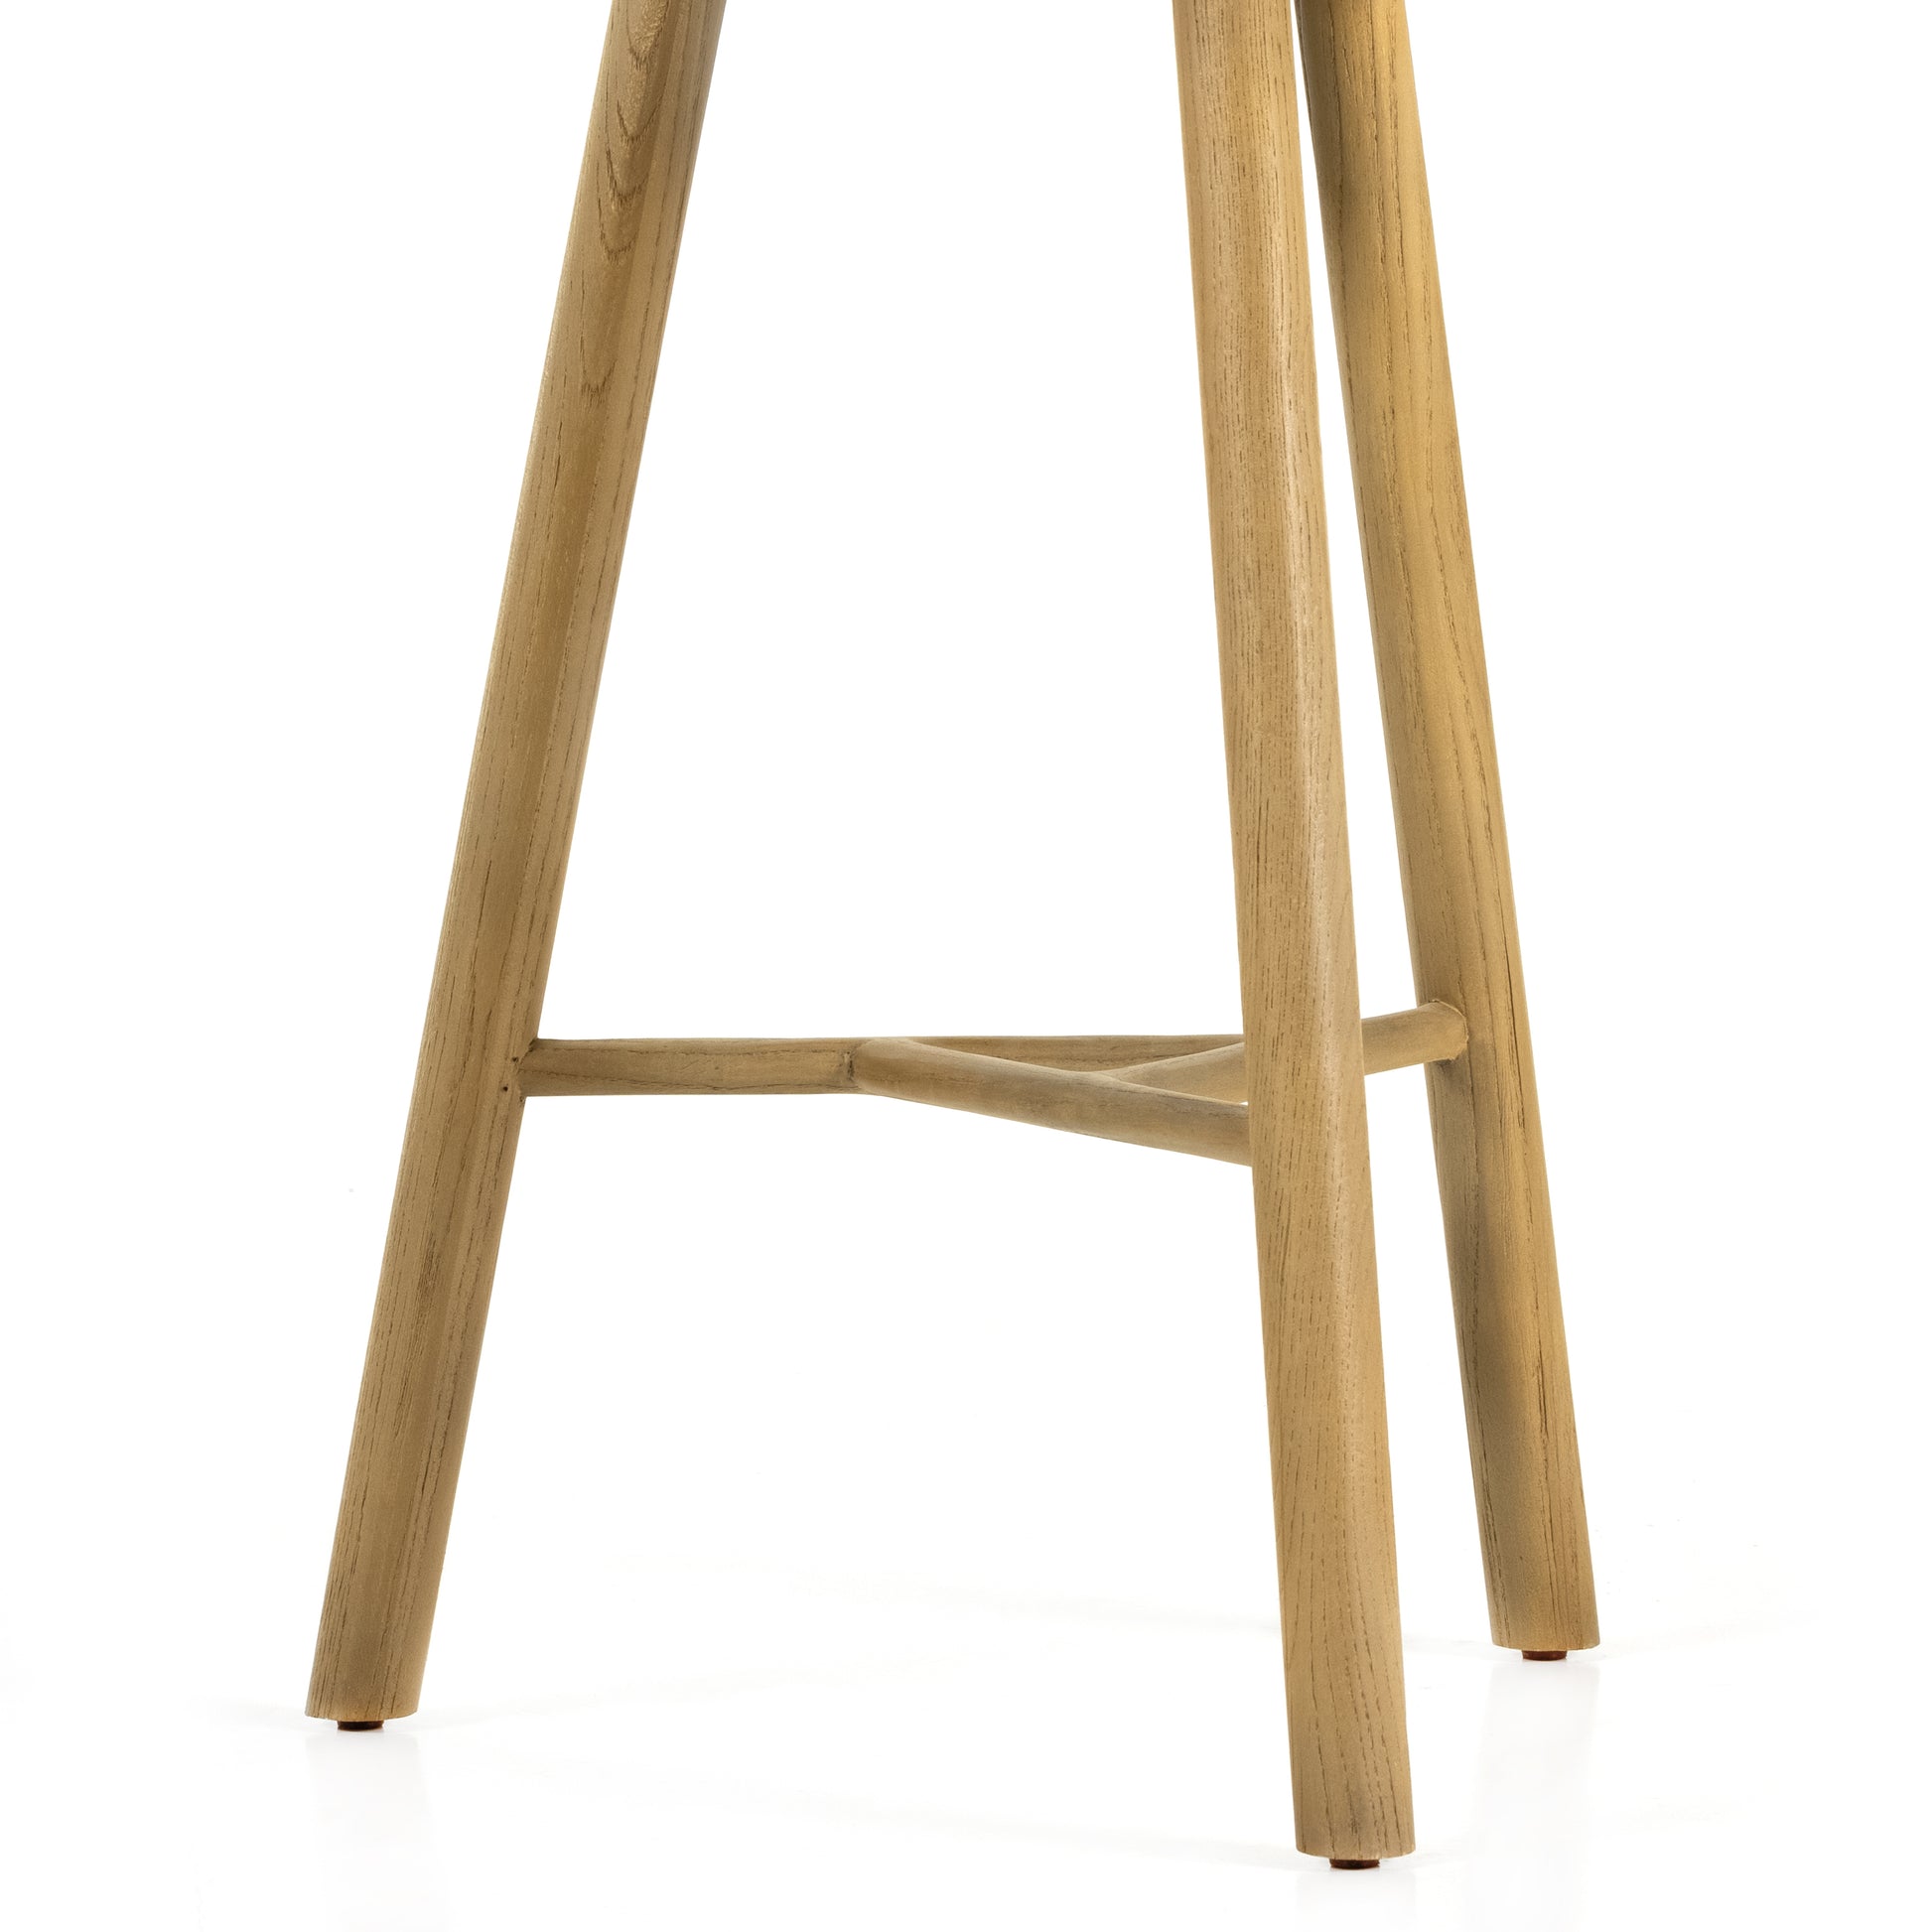 natural wood bar stool three legs